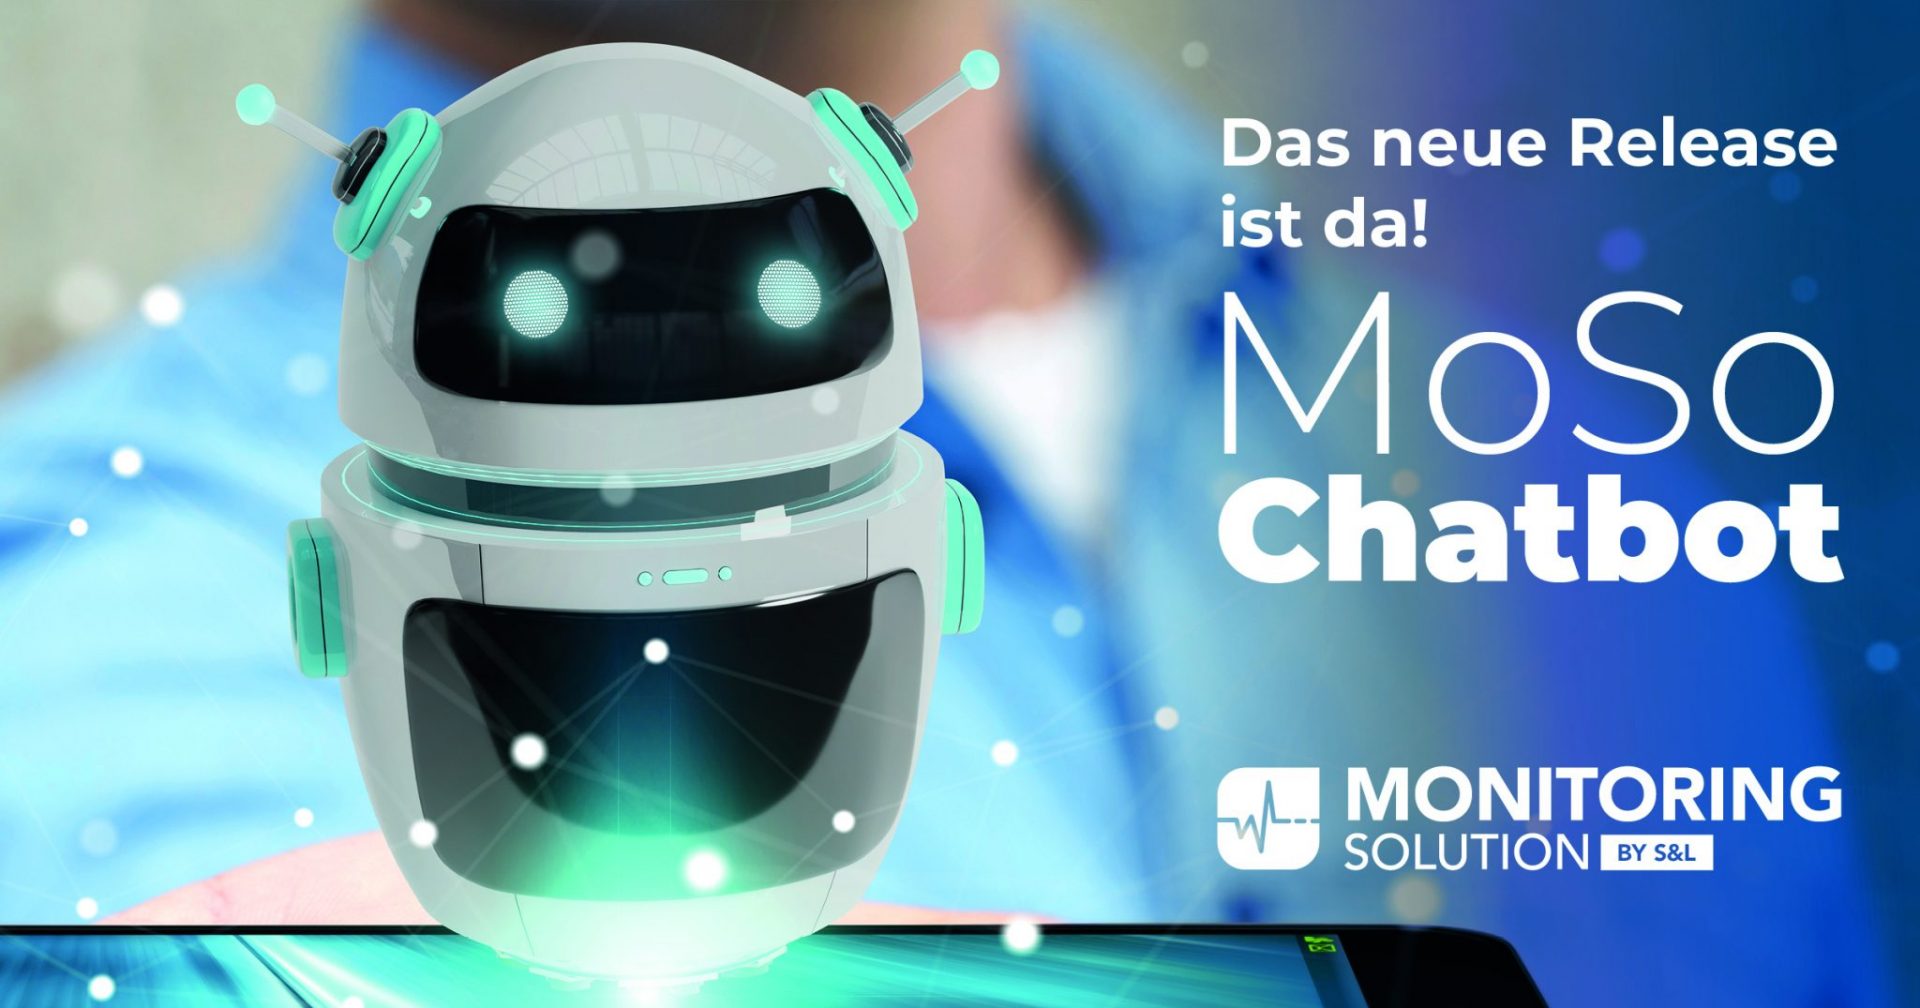 MoSo-Chatbot: Februar 2018 Release